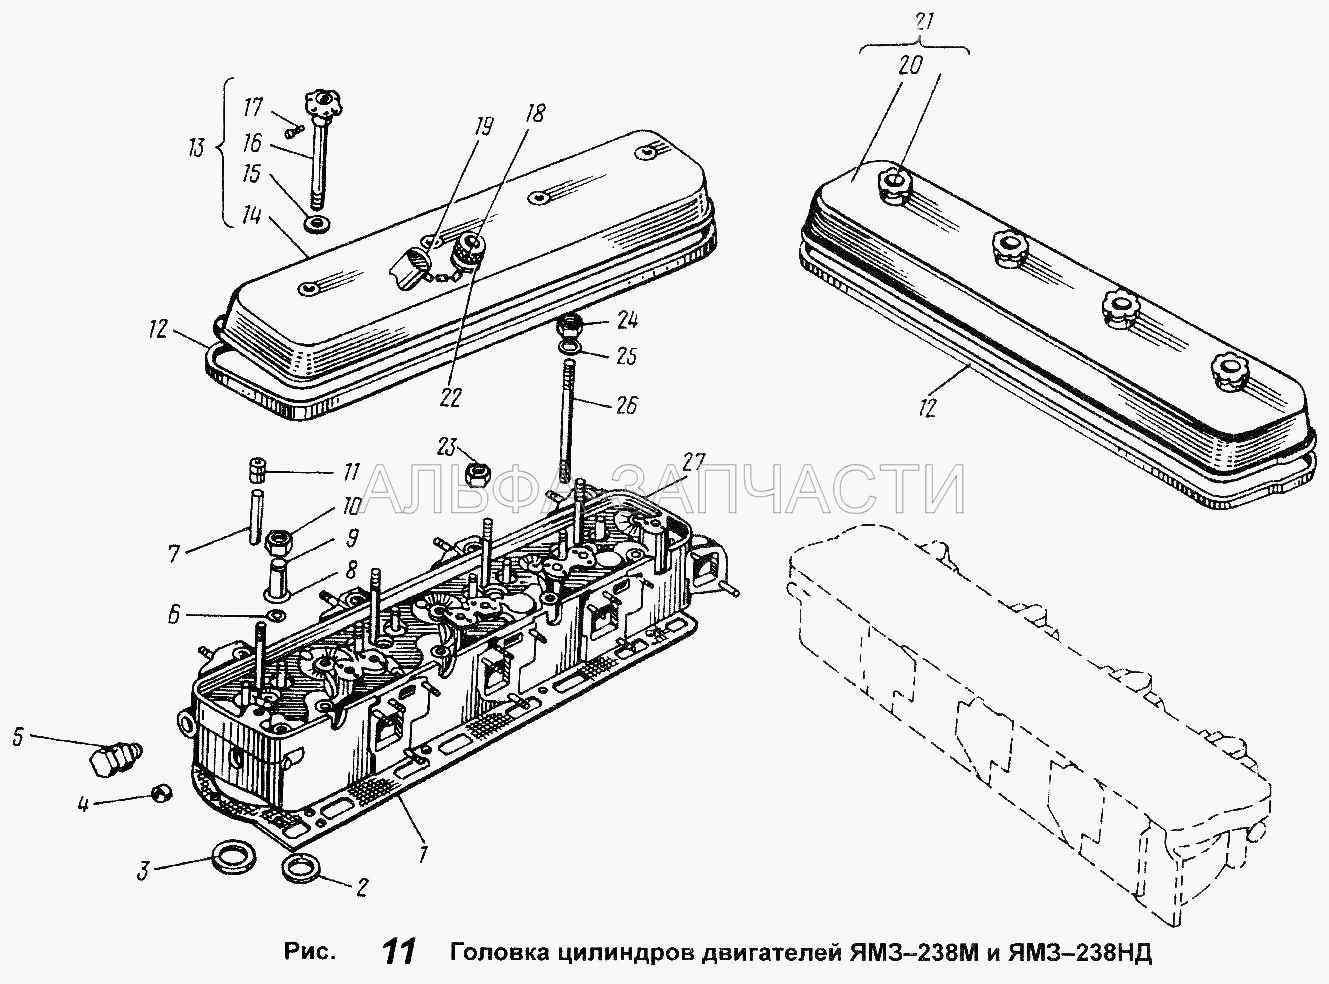 Головка цилиндров двигателей ЯМЗ-238М и ЯМЗ-238НД (238-1003270 Прокладка крышки головки цилиндров) 